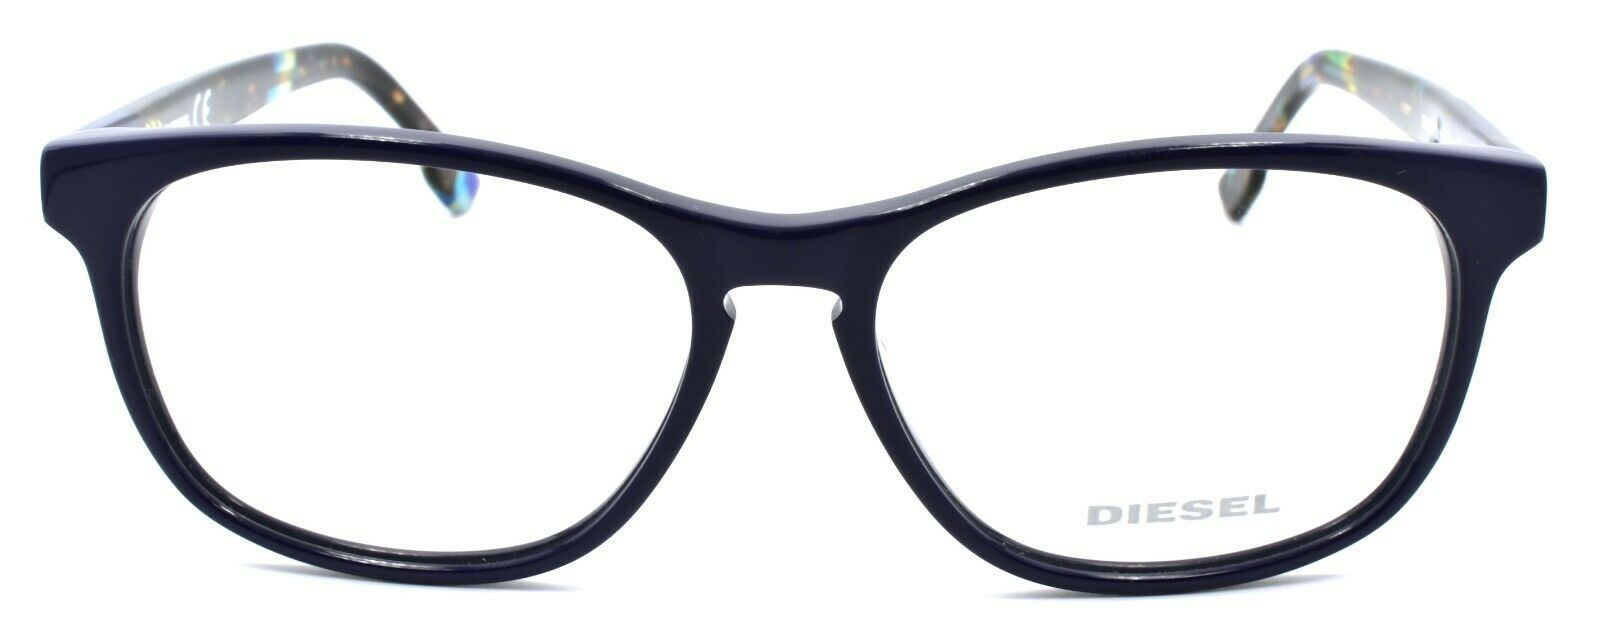 2-Diesel DL5187 090 Unisex Eyeglasses Frames 54-15-145 Shiny Blue-664689763818-IKSpecs